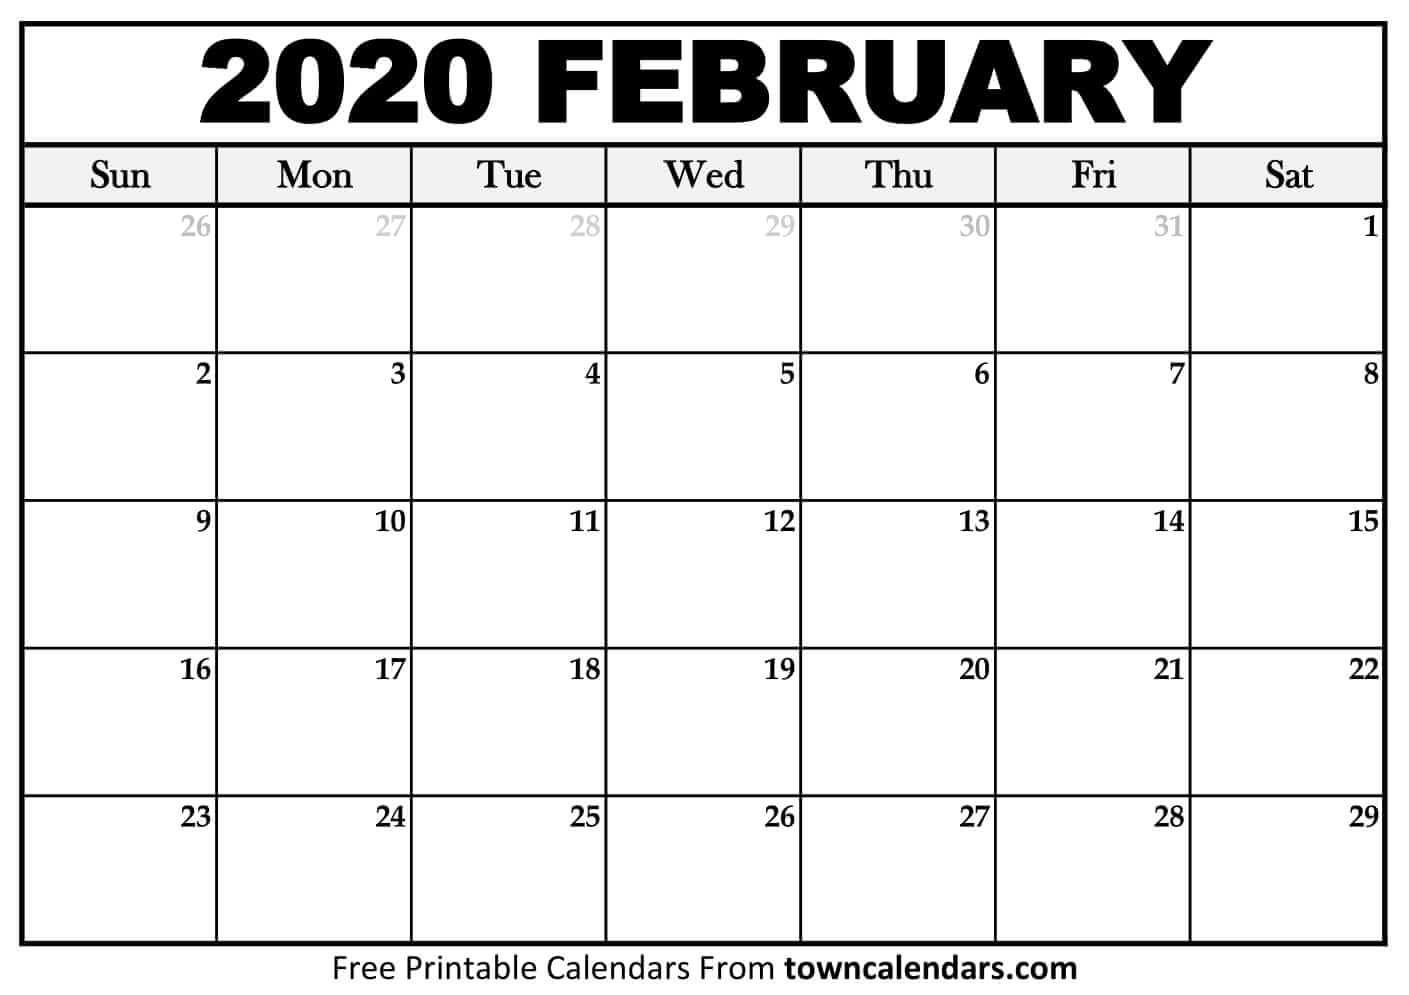 Printable February 2020 Calendar - Towncalendars